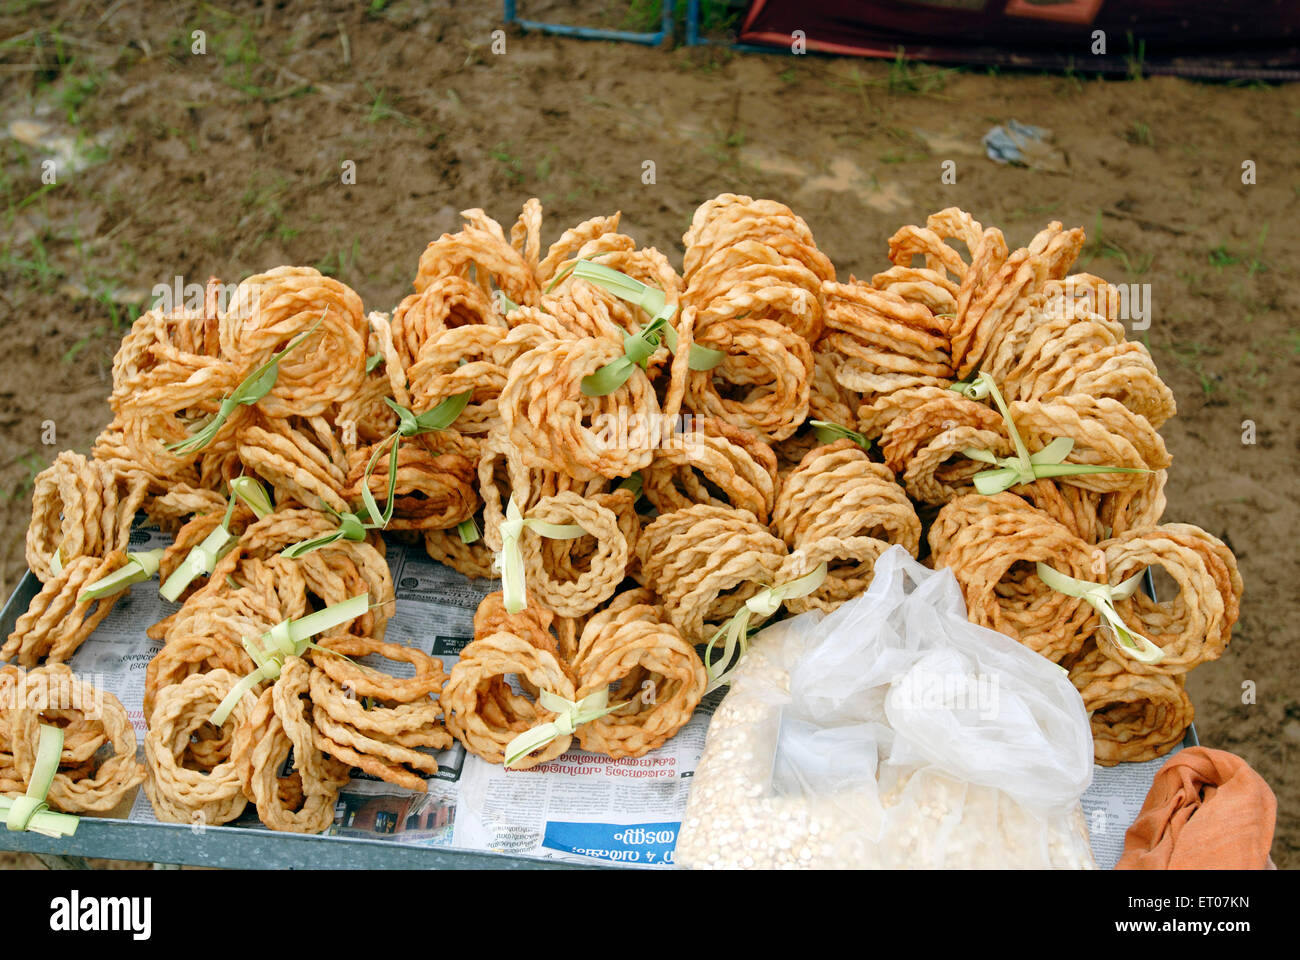 Indian snack, Murukku vendor, Murukku, savoury, crunchy snack,  kerala, India, asia Stock Photo